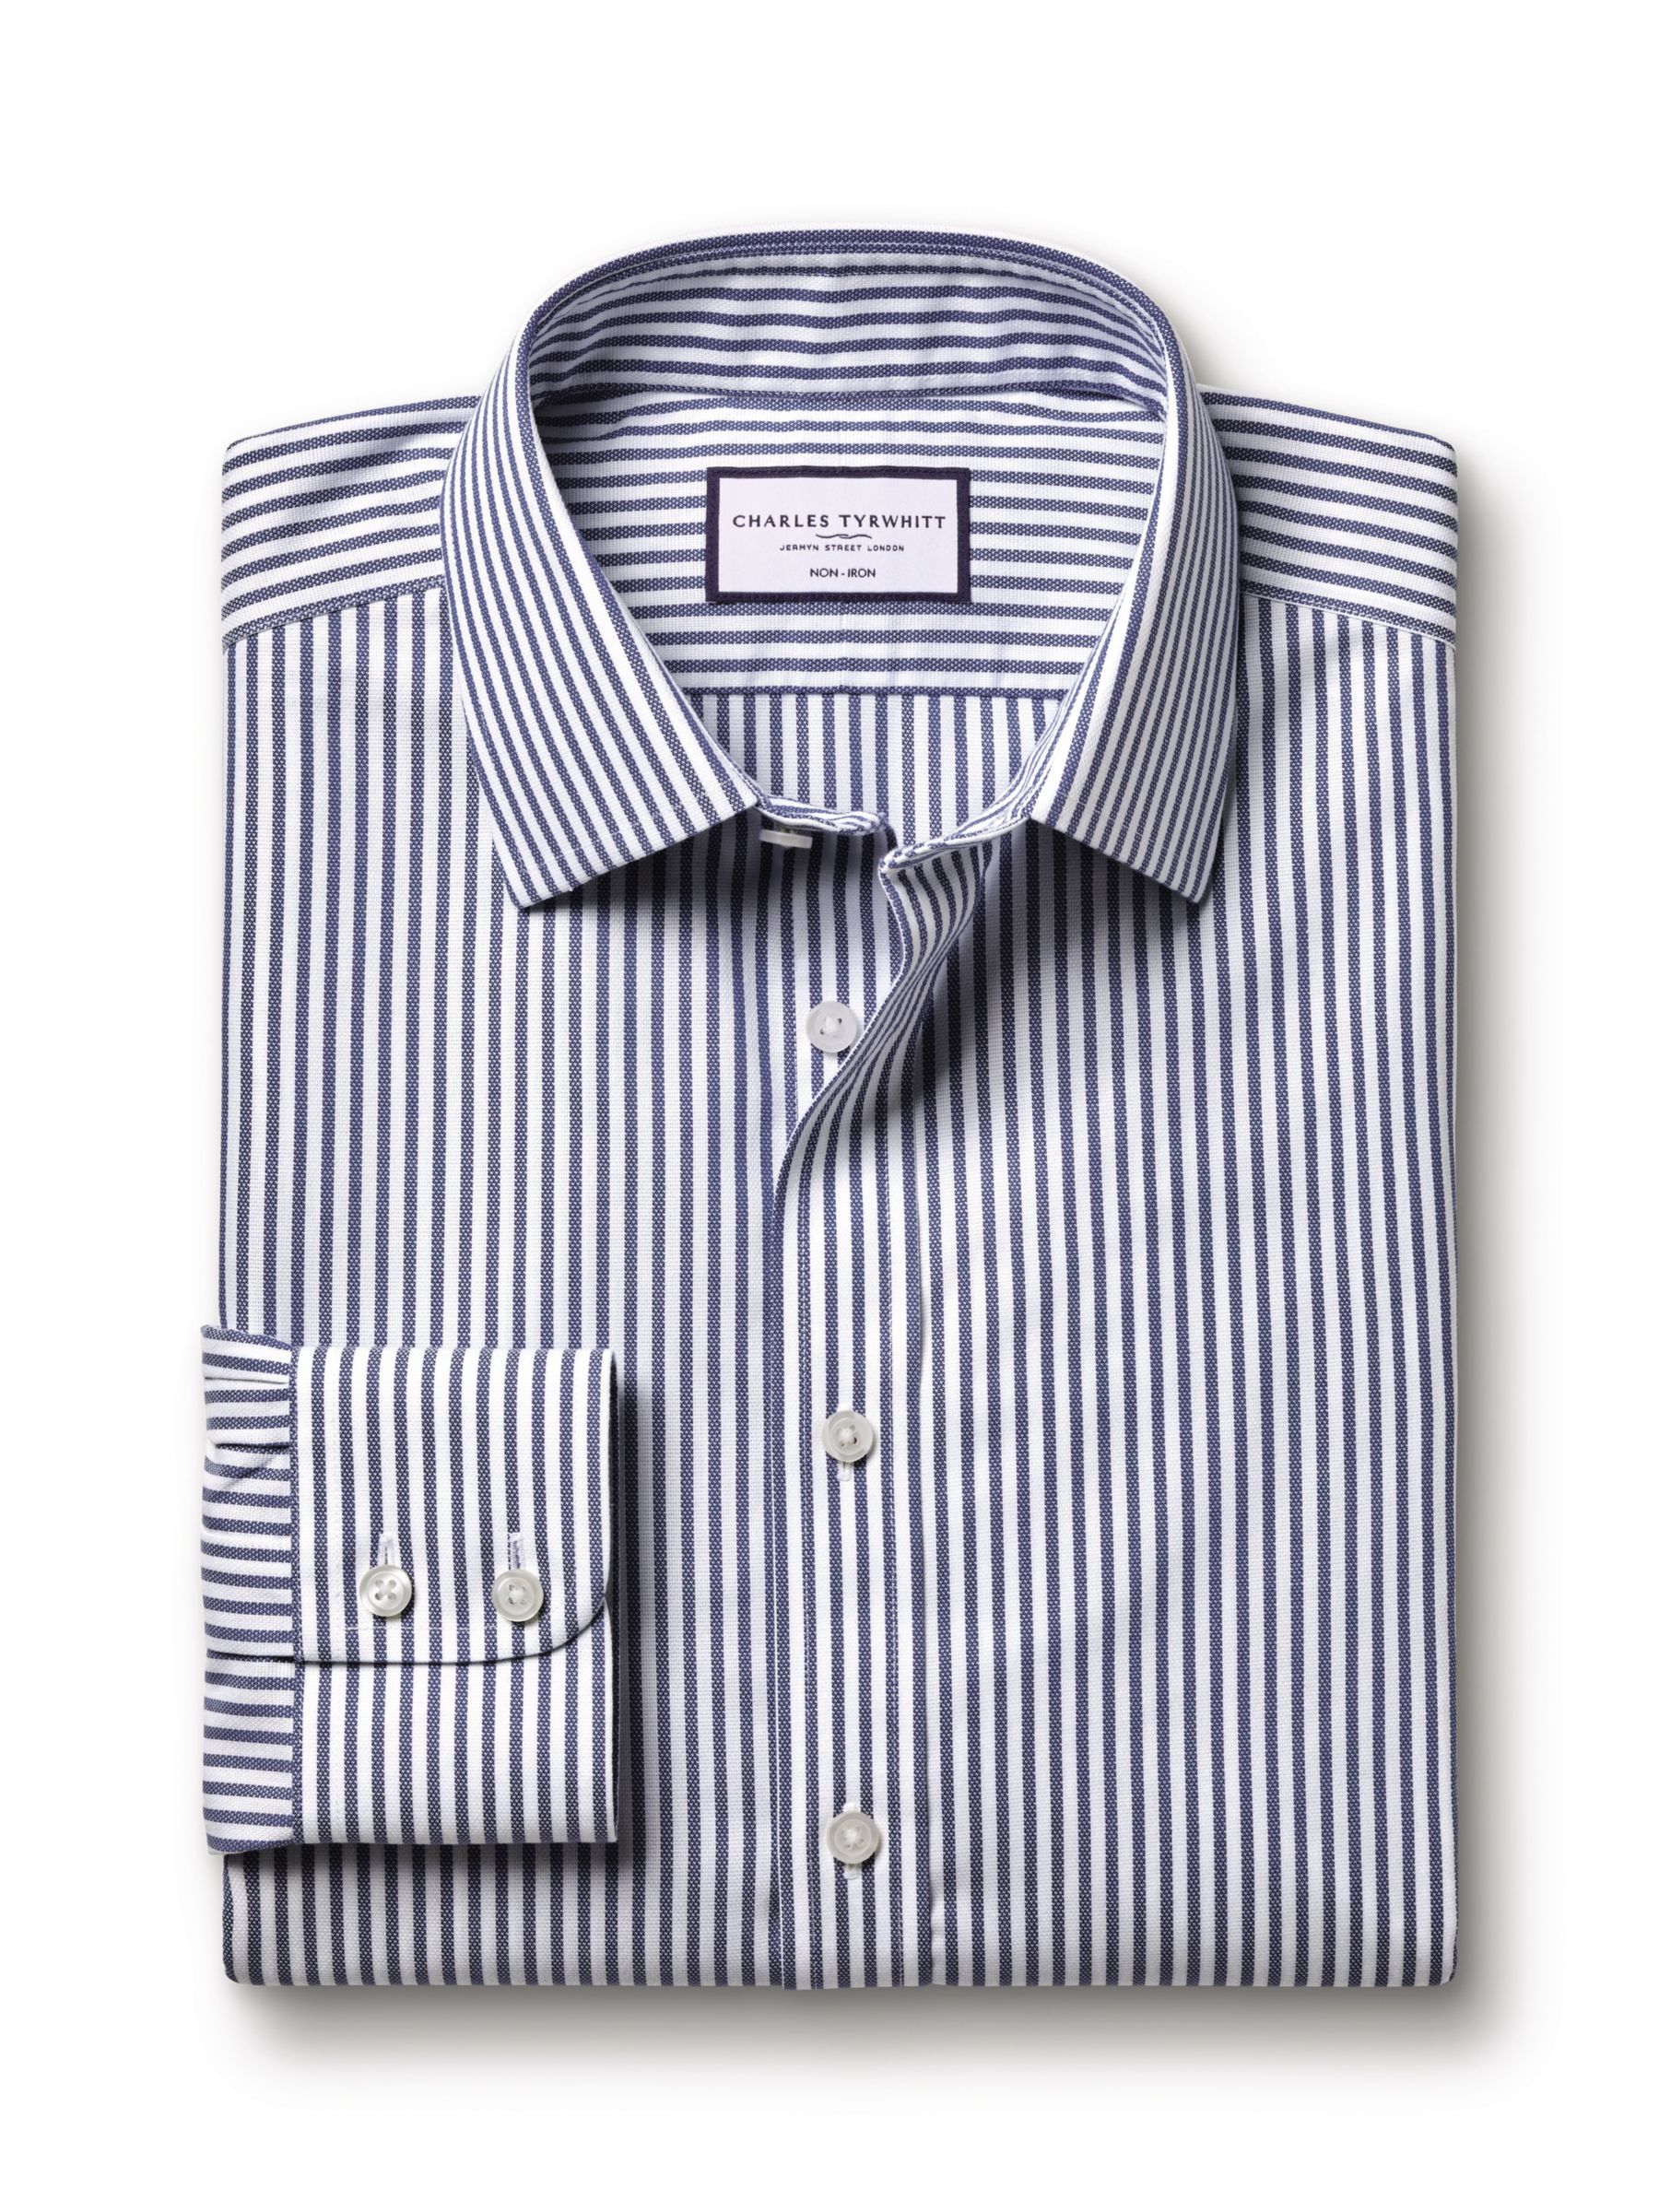 Charles Tyrwhitt Non-Iron Stripe Royal Oxford Shirt, Royal Blue/White, 15.5